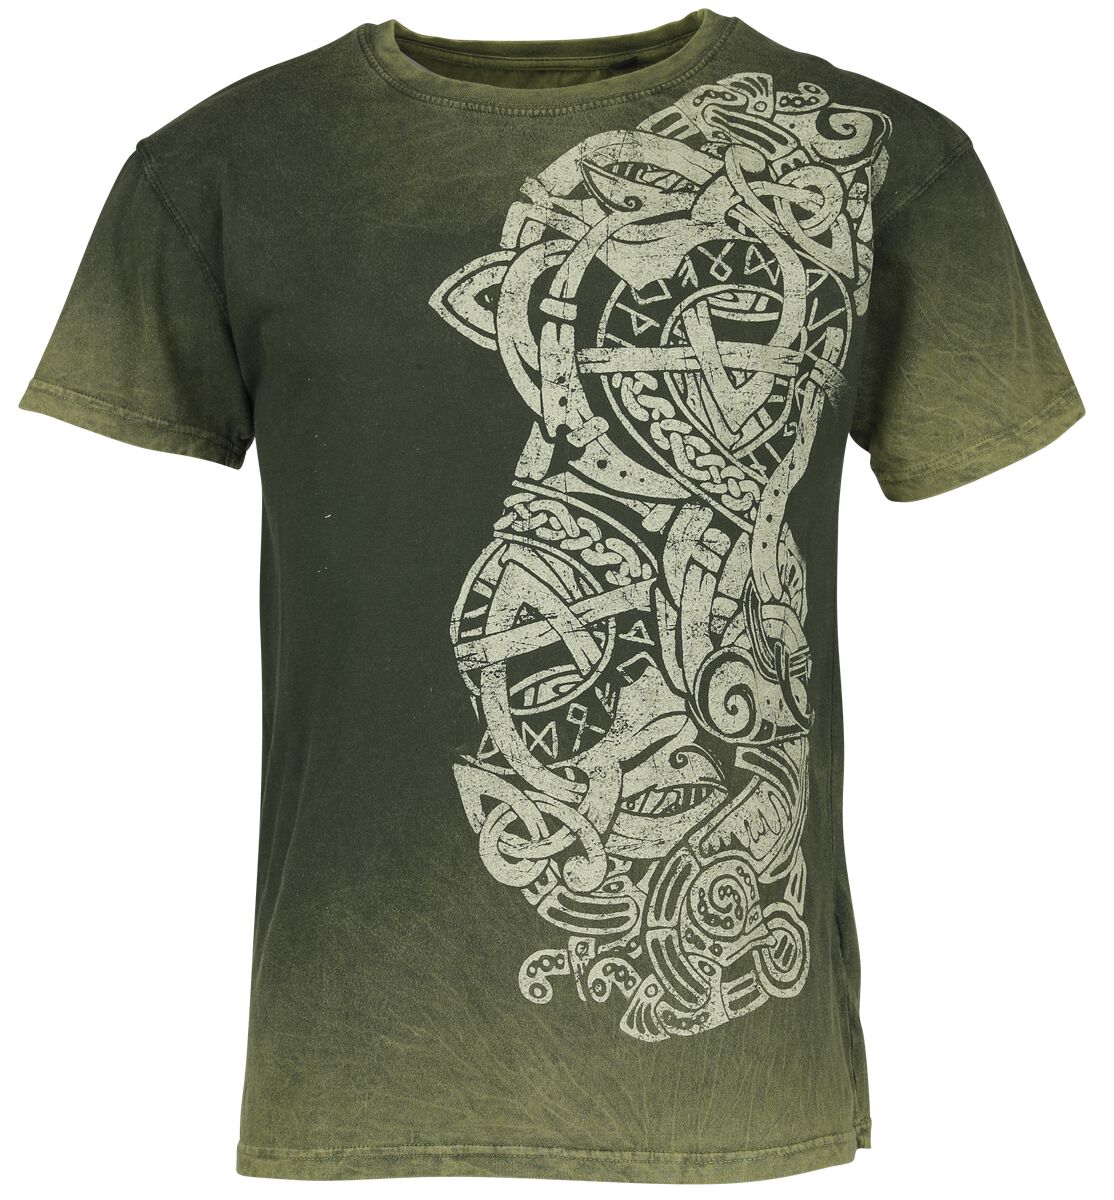 Outer Vision T-Shirt - Bucaneer Tattoo - S bis 4XL - für Männer - Größe 4XL - grün